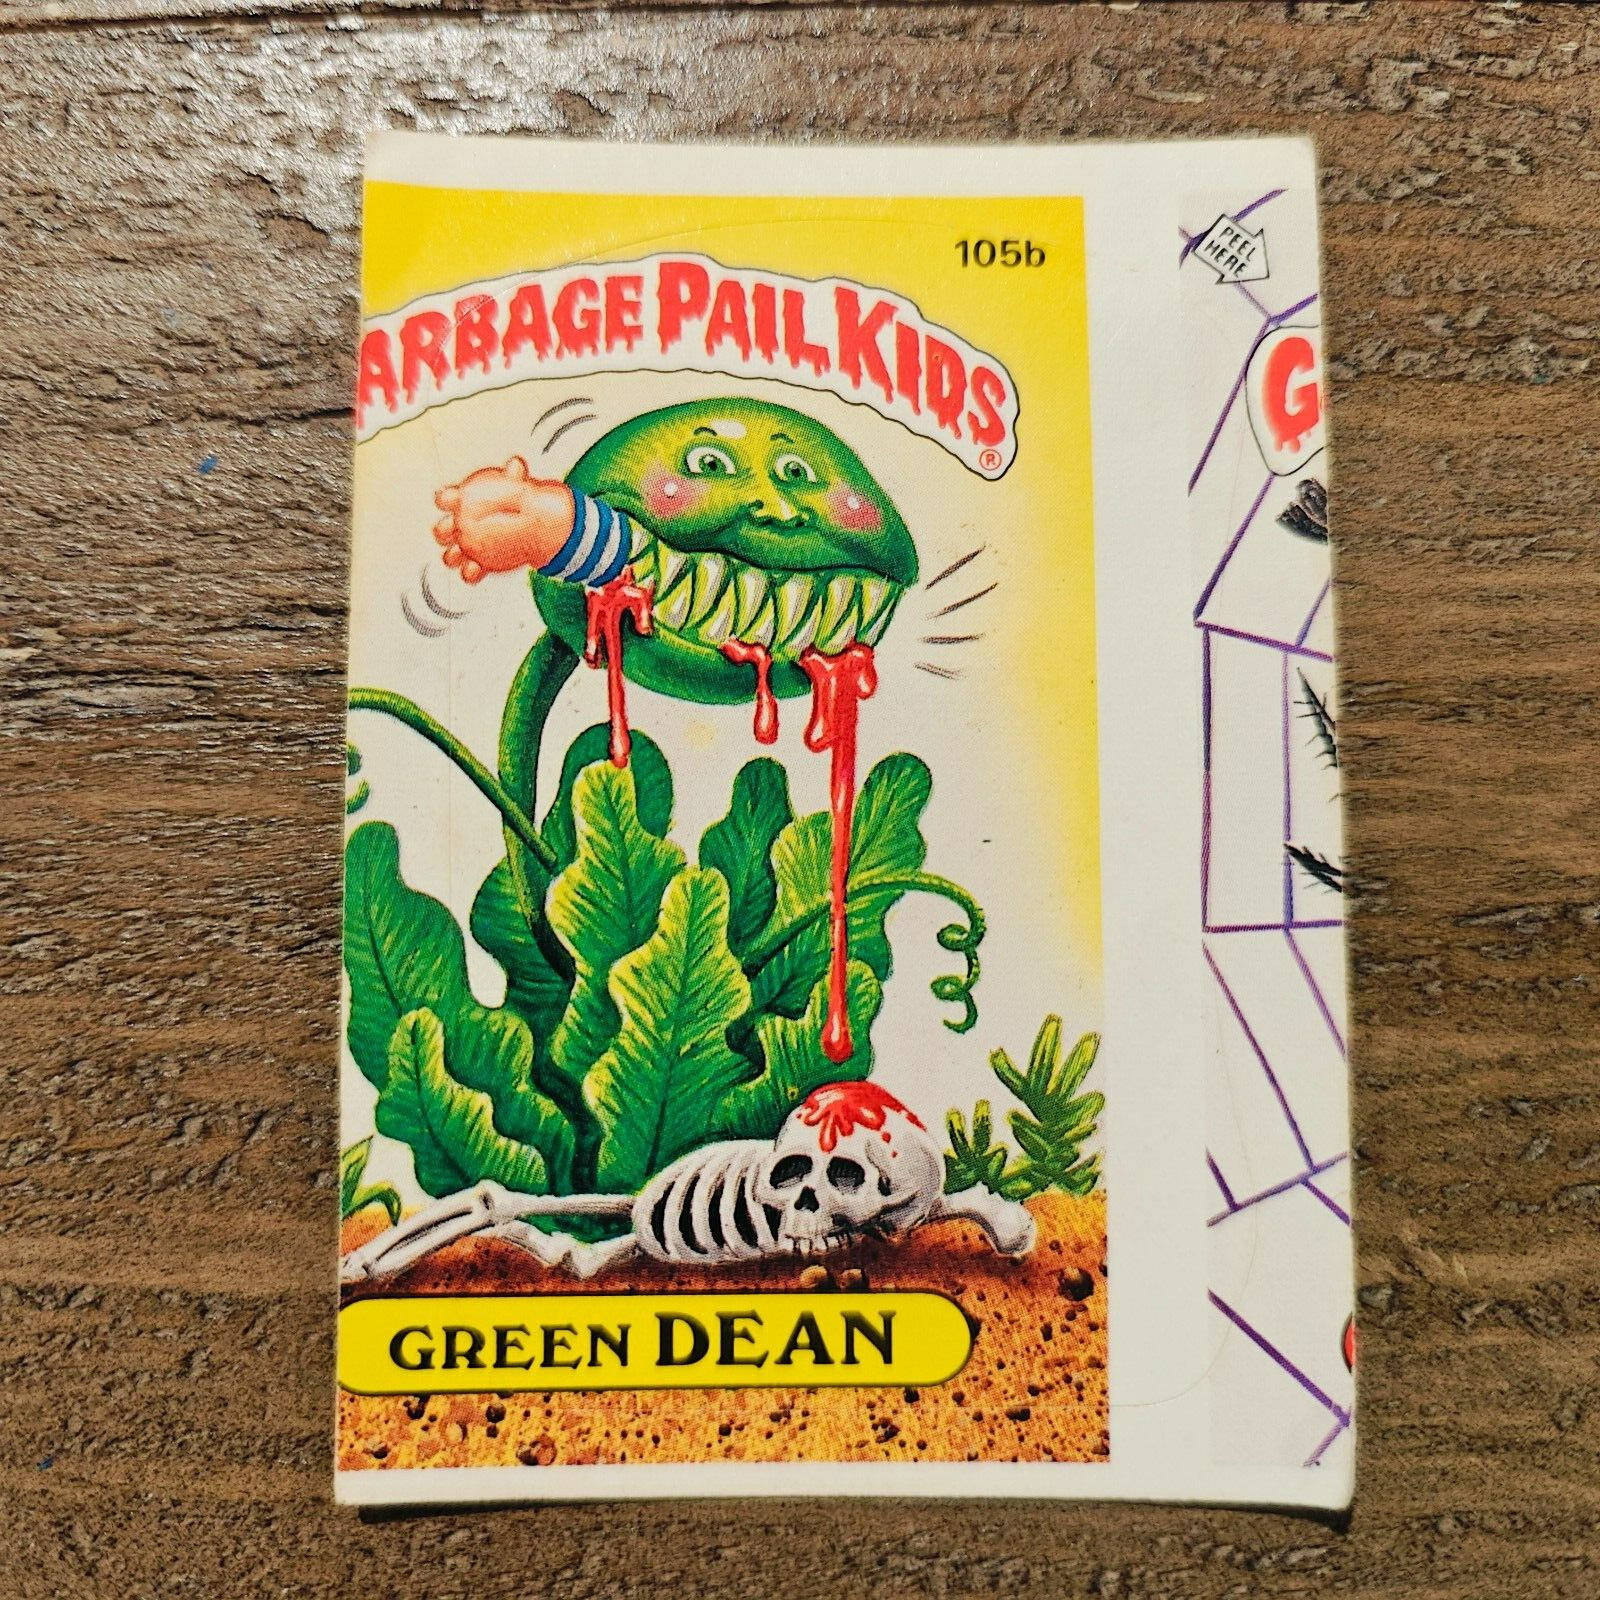 Green Dean Garbage Pail Kids 1986 Topps Card Misprint OFF CENTER &MISCUT 105b